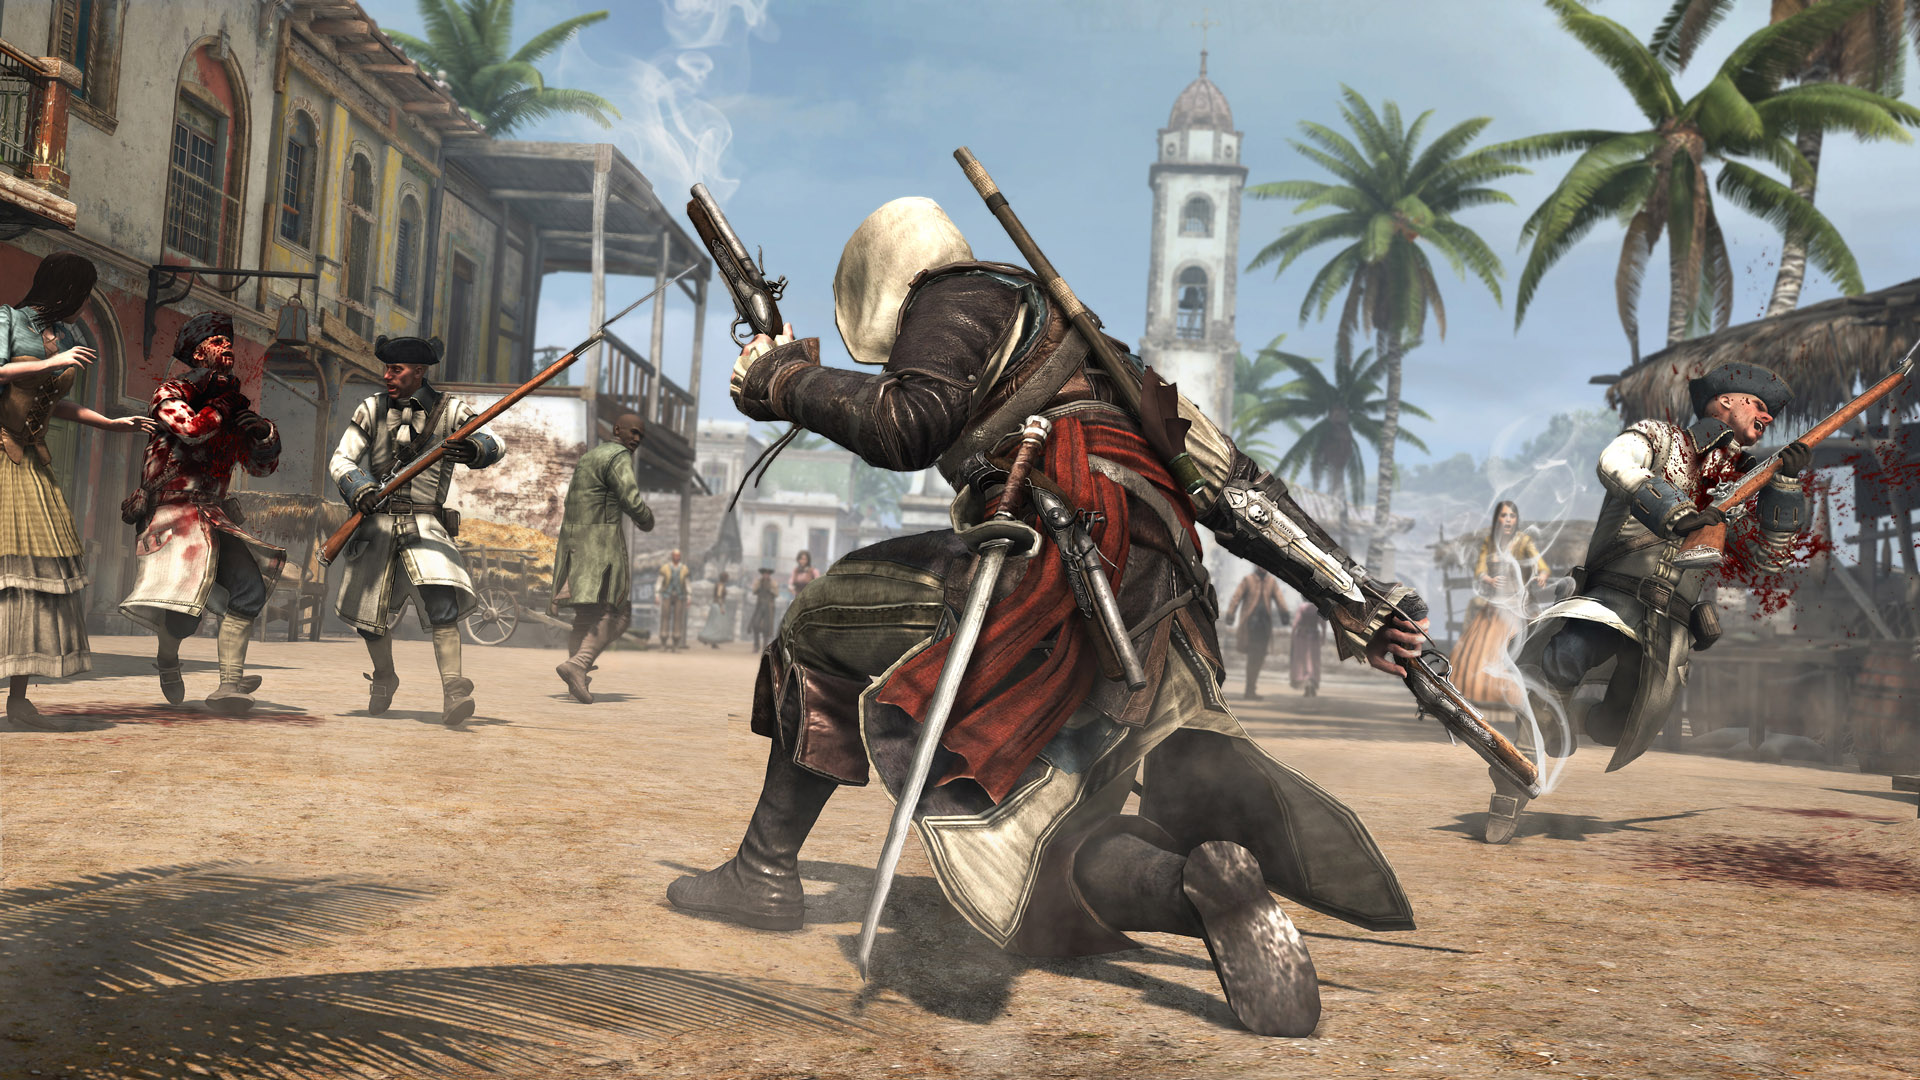 Скриншот *Assassin's Creed IV: Black Flag [PS4] 5.05 / 6.72 / 7.02 [EUR] (2013) [Русский] (v1.04)*